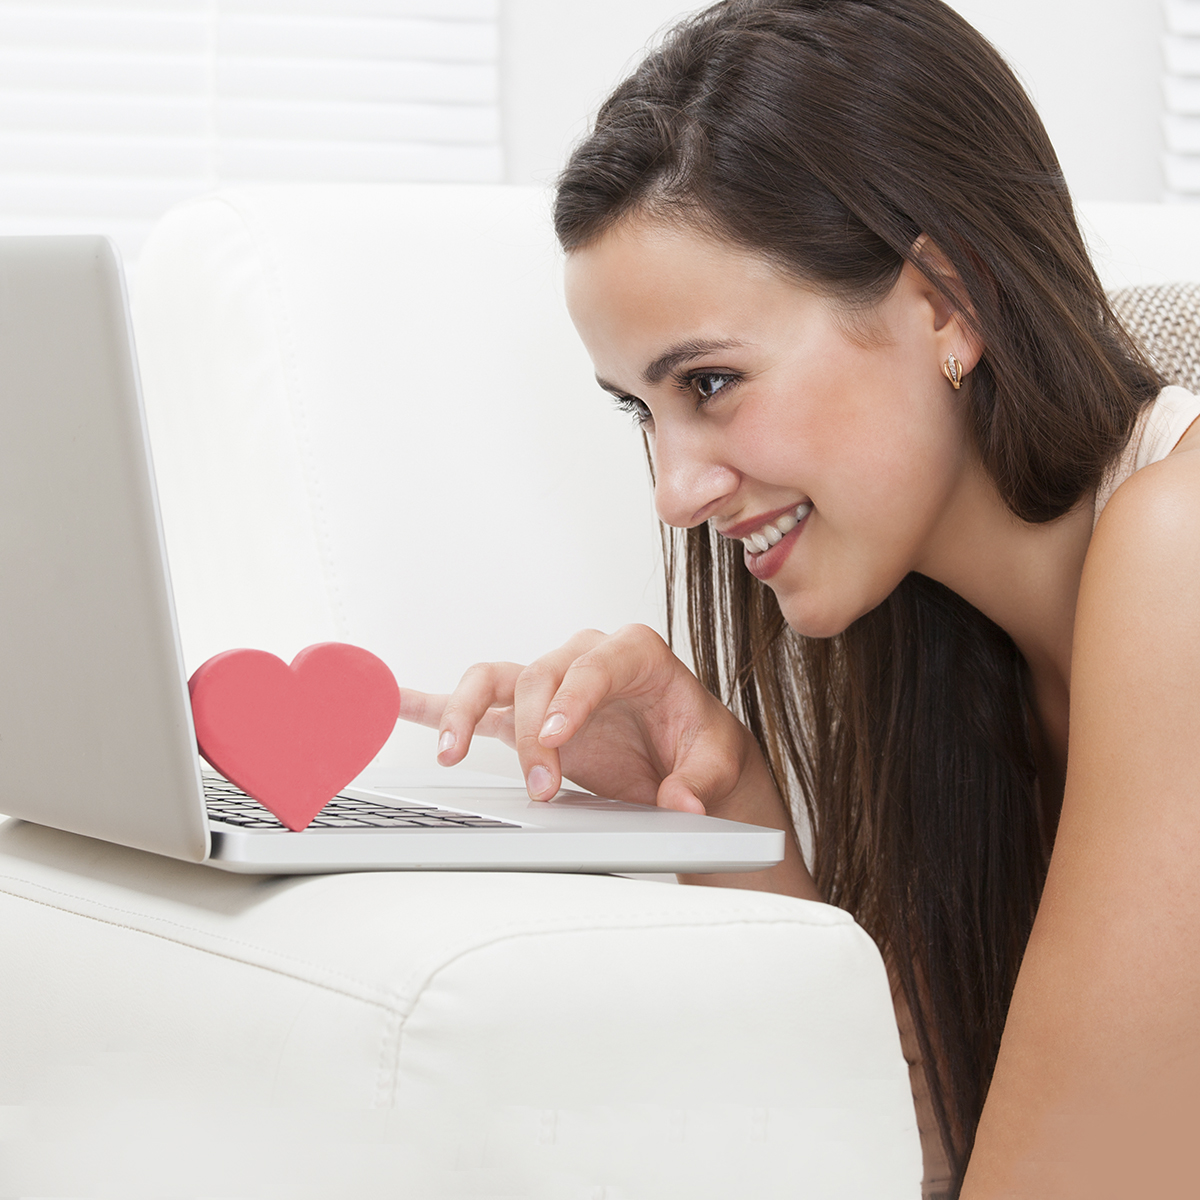 skadate online dating software